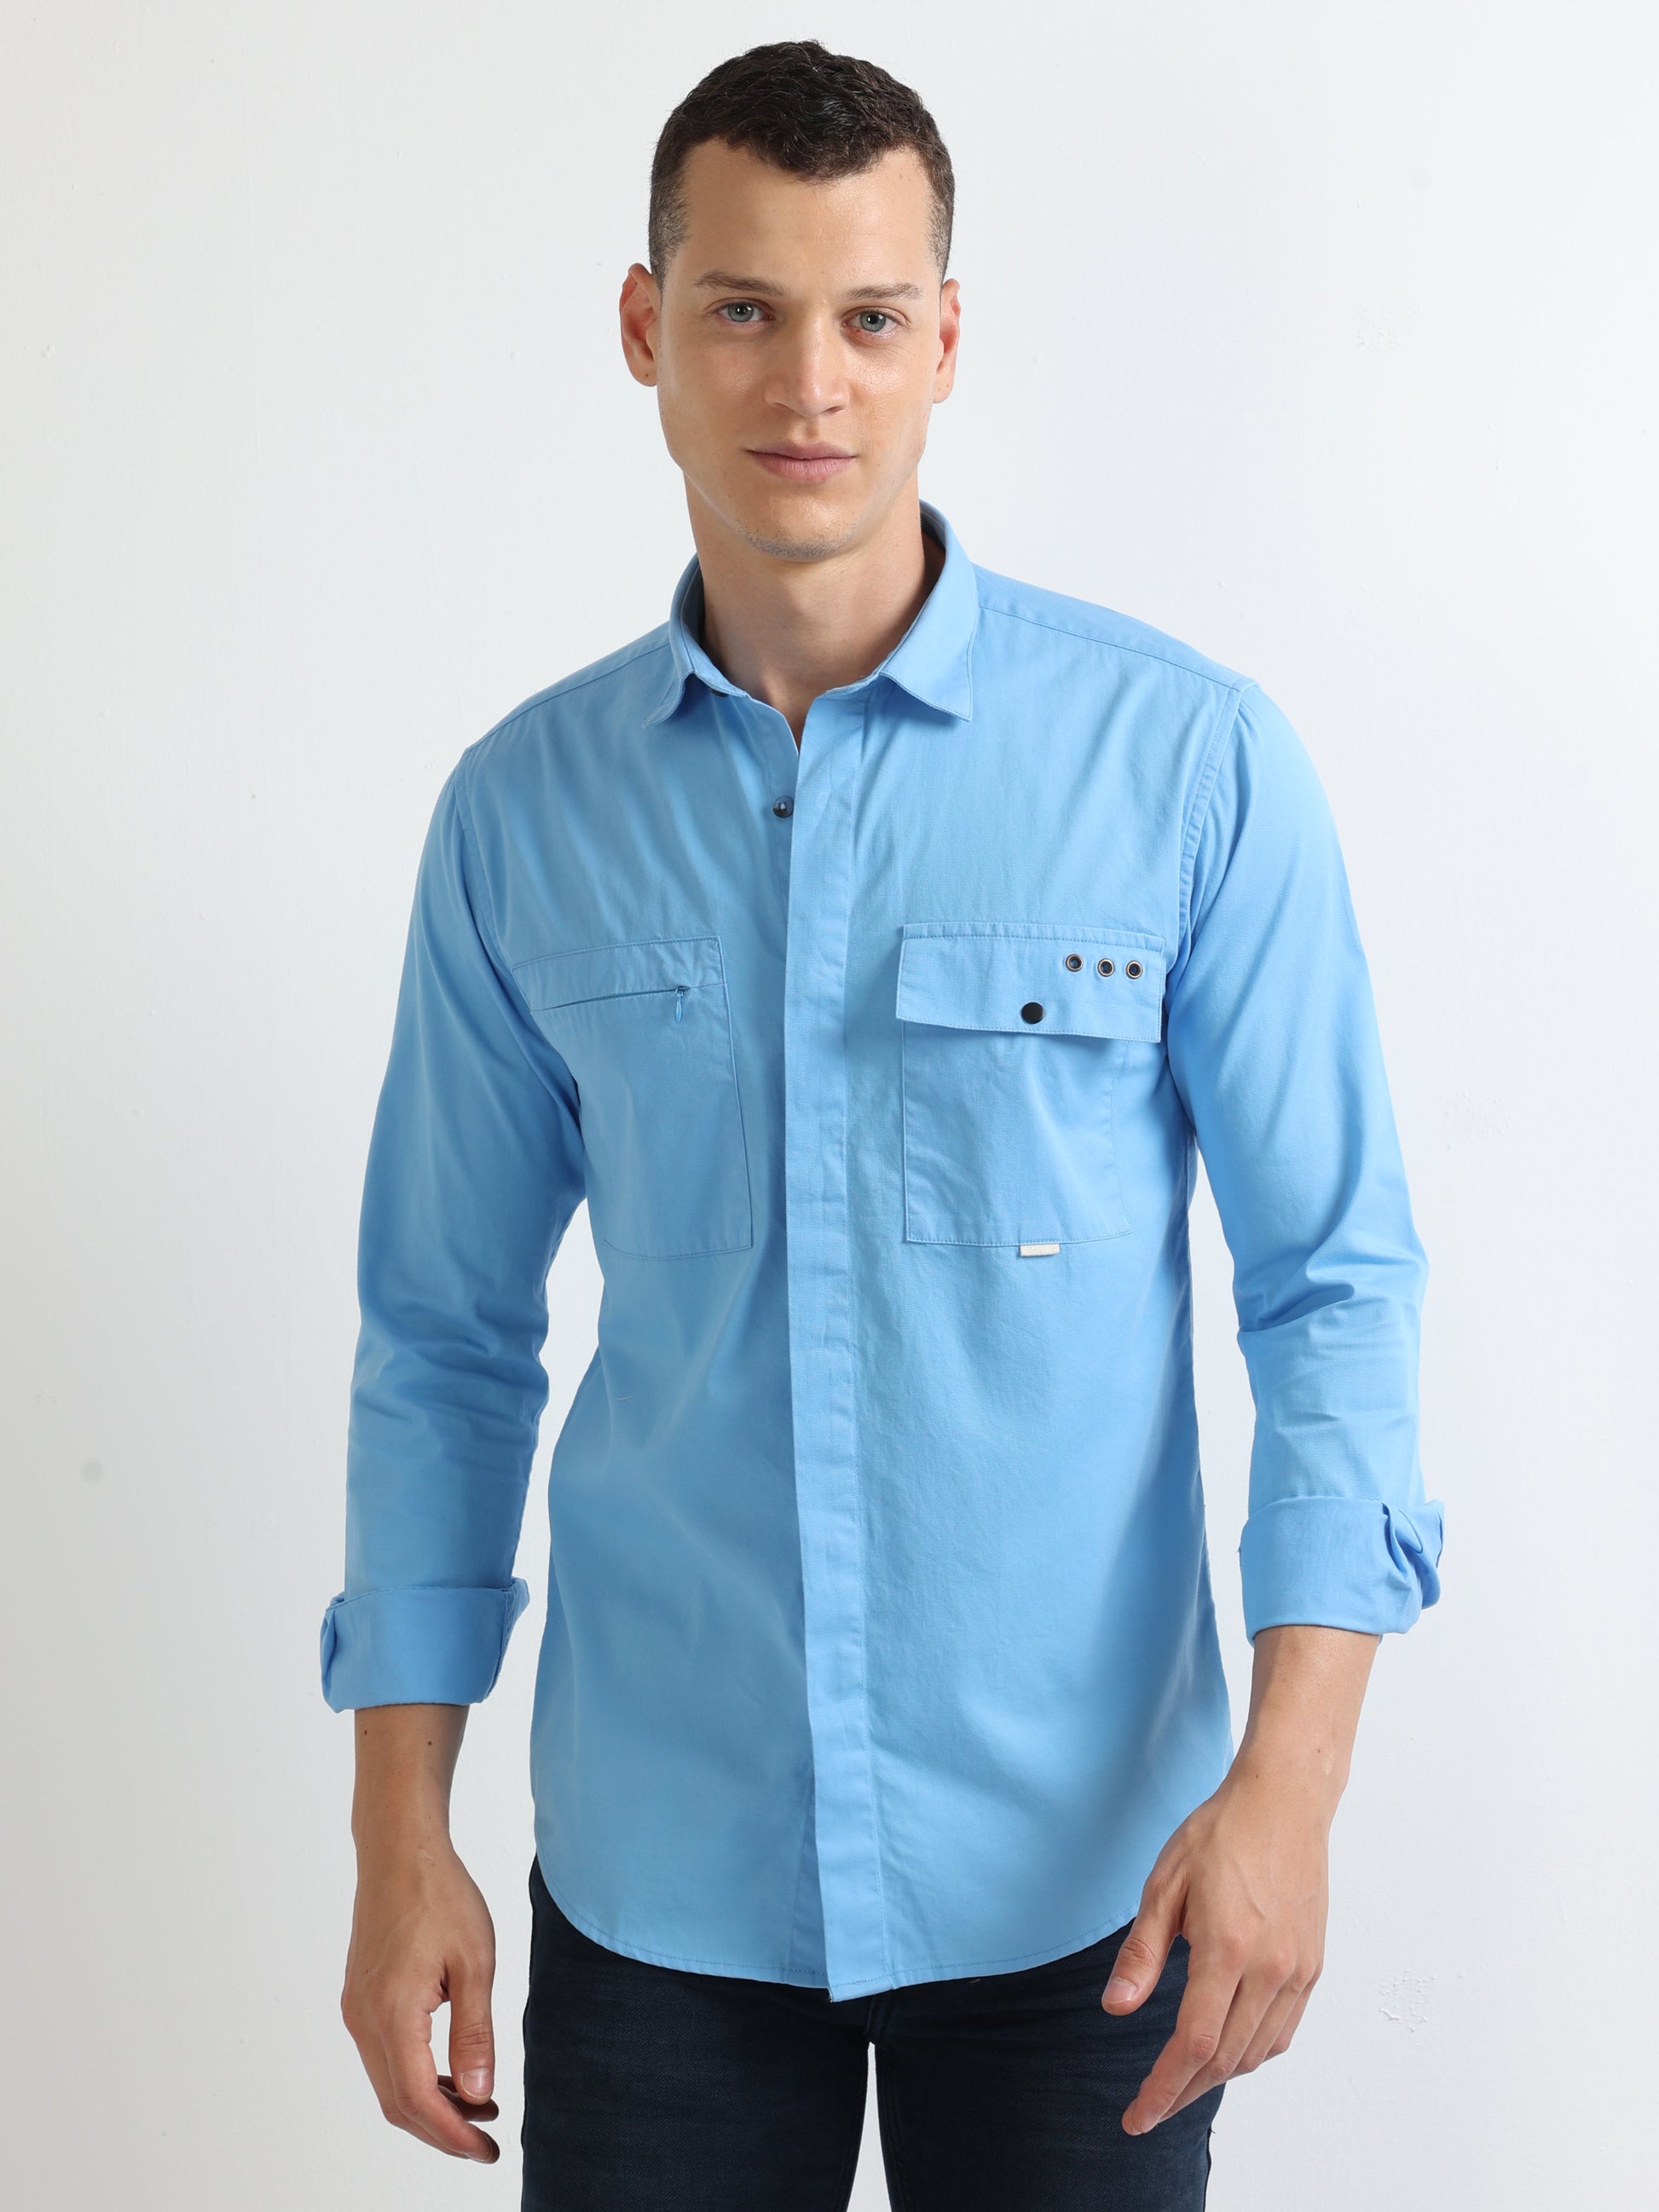 sky blue plain hidden pocket shirt for men